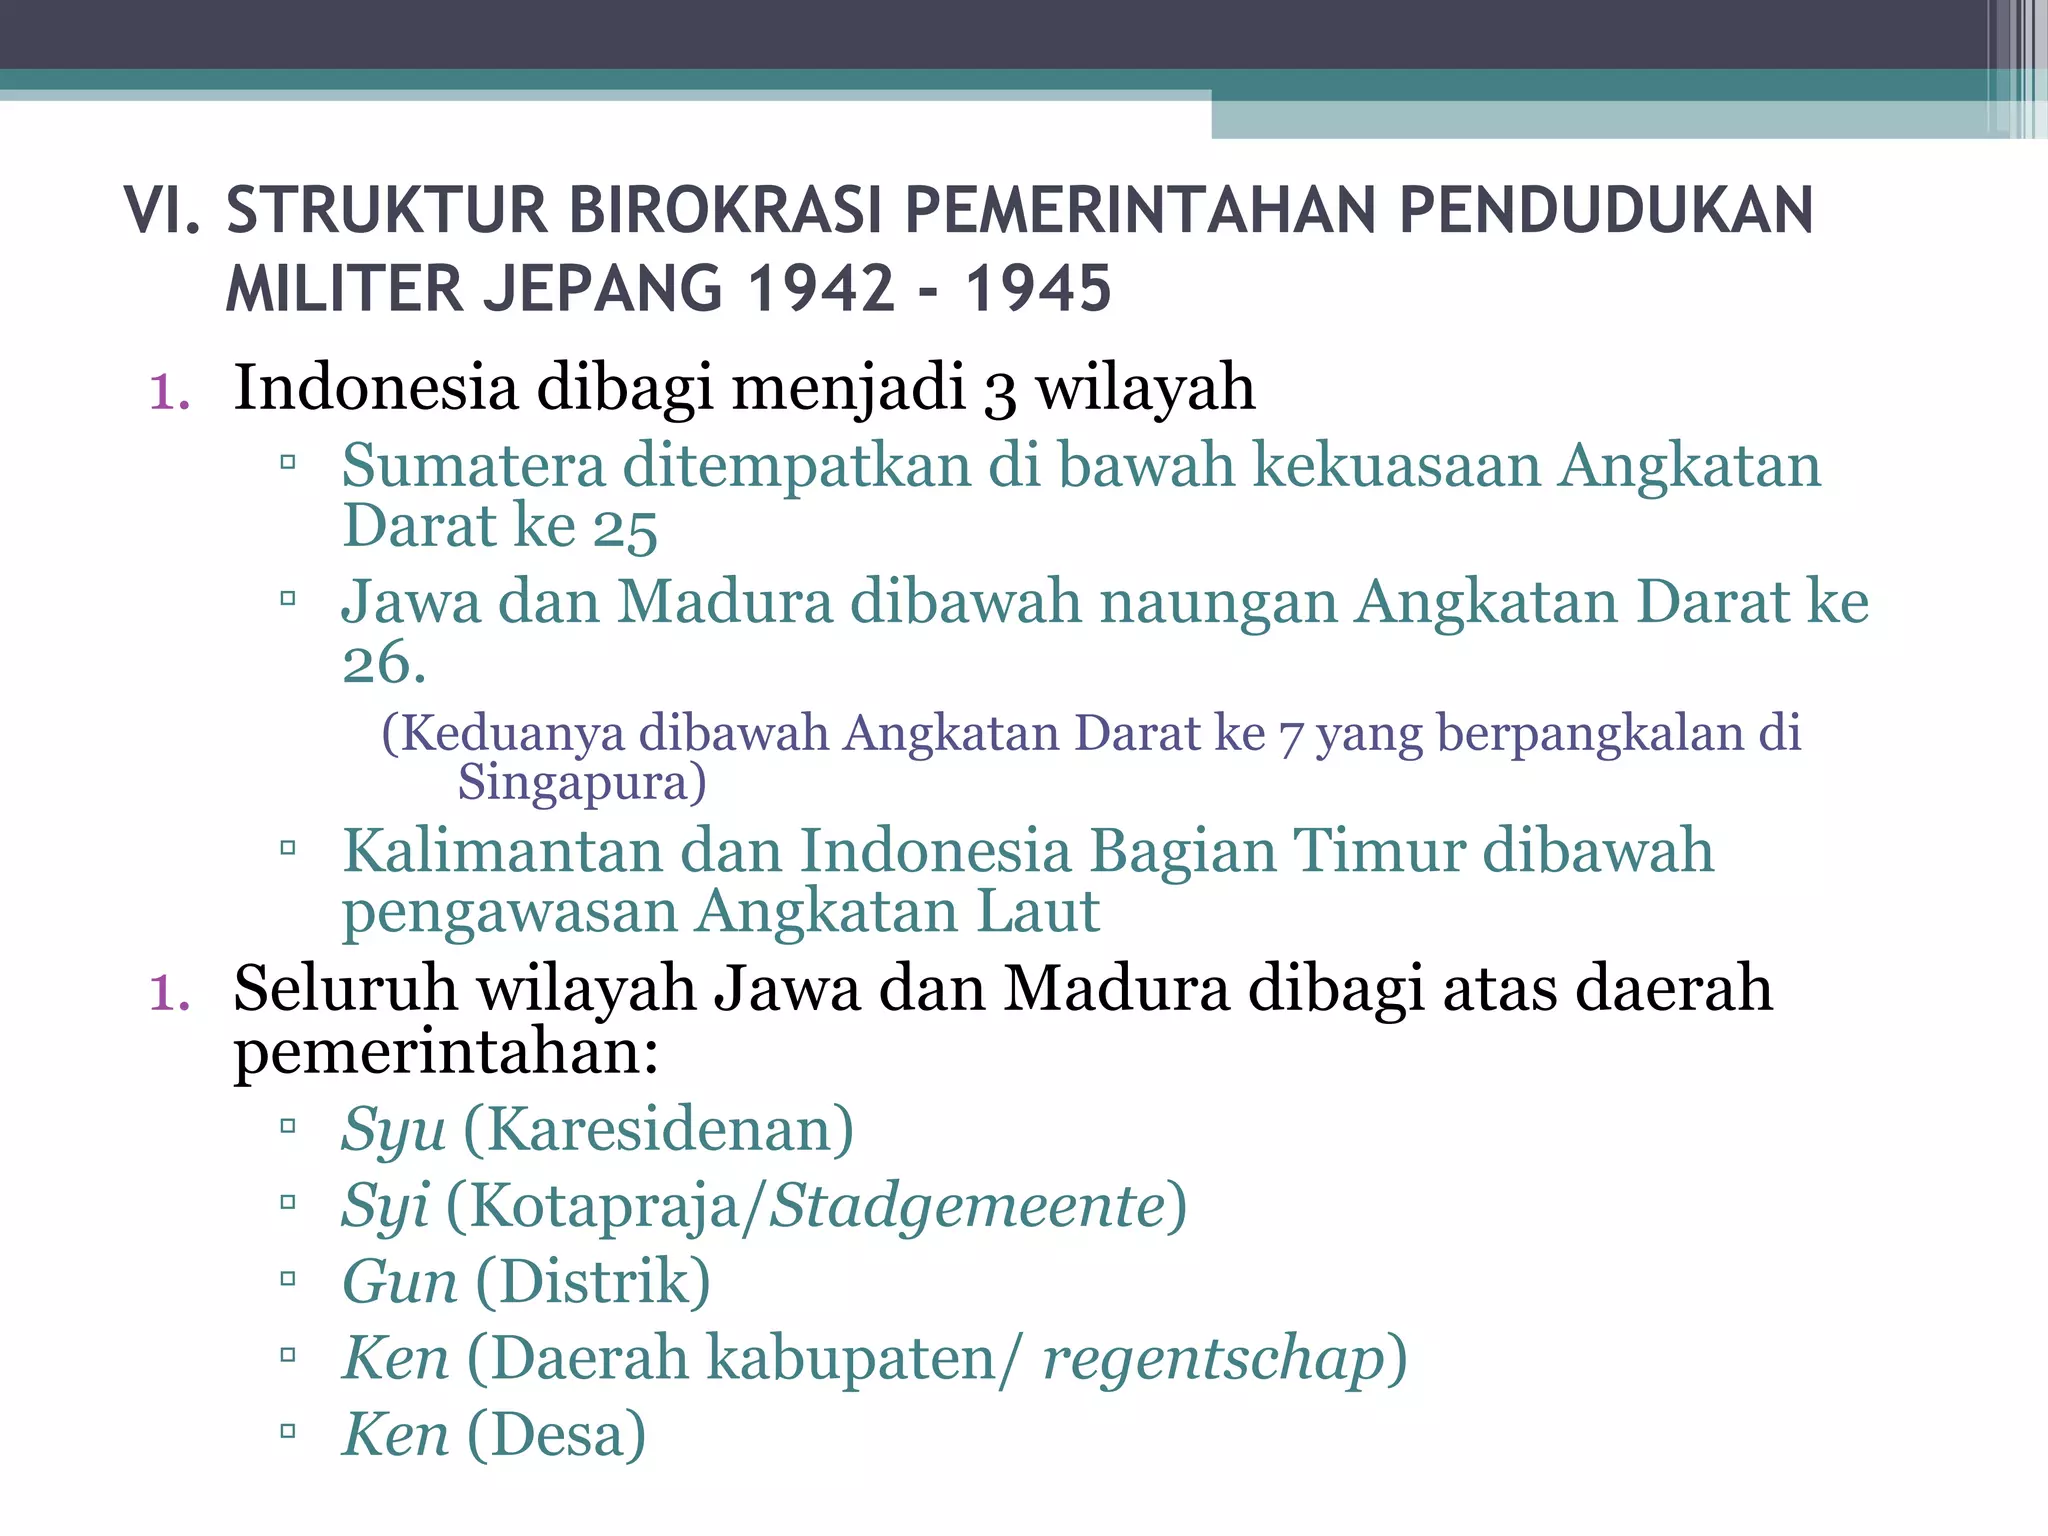 Sejarah Birokrasi Indonesia